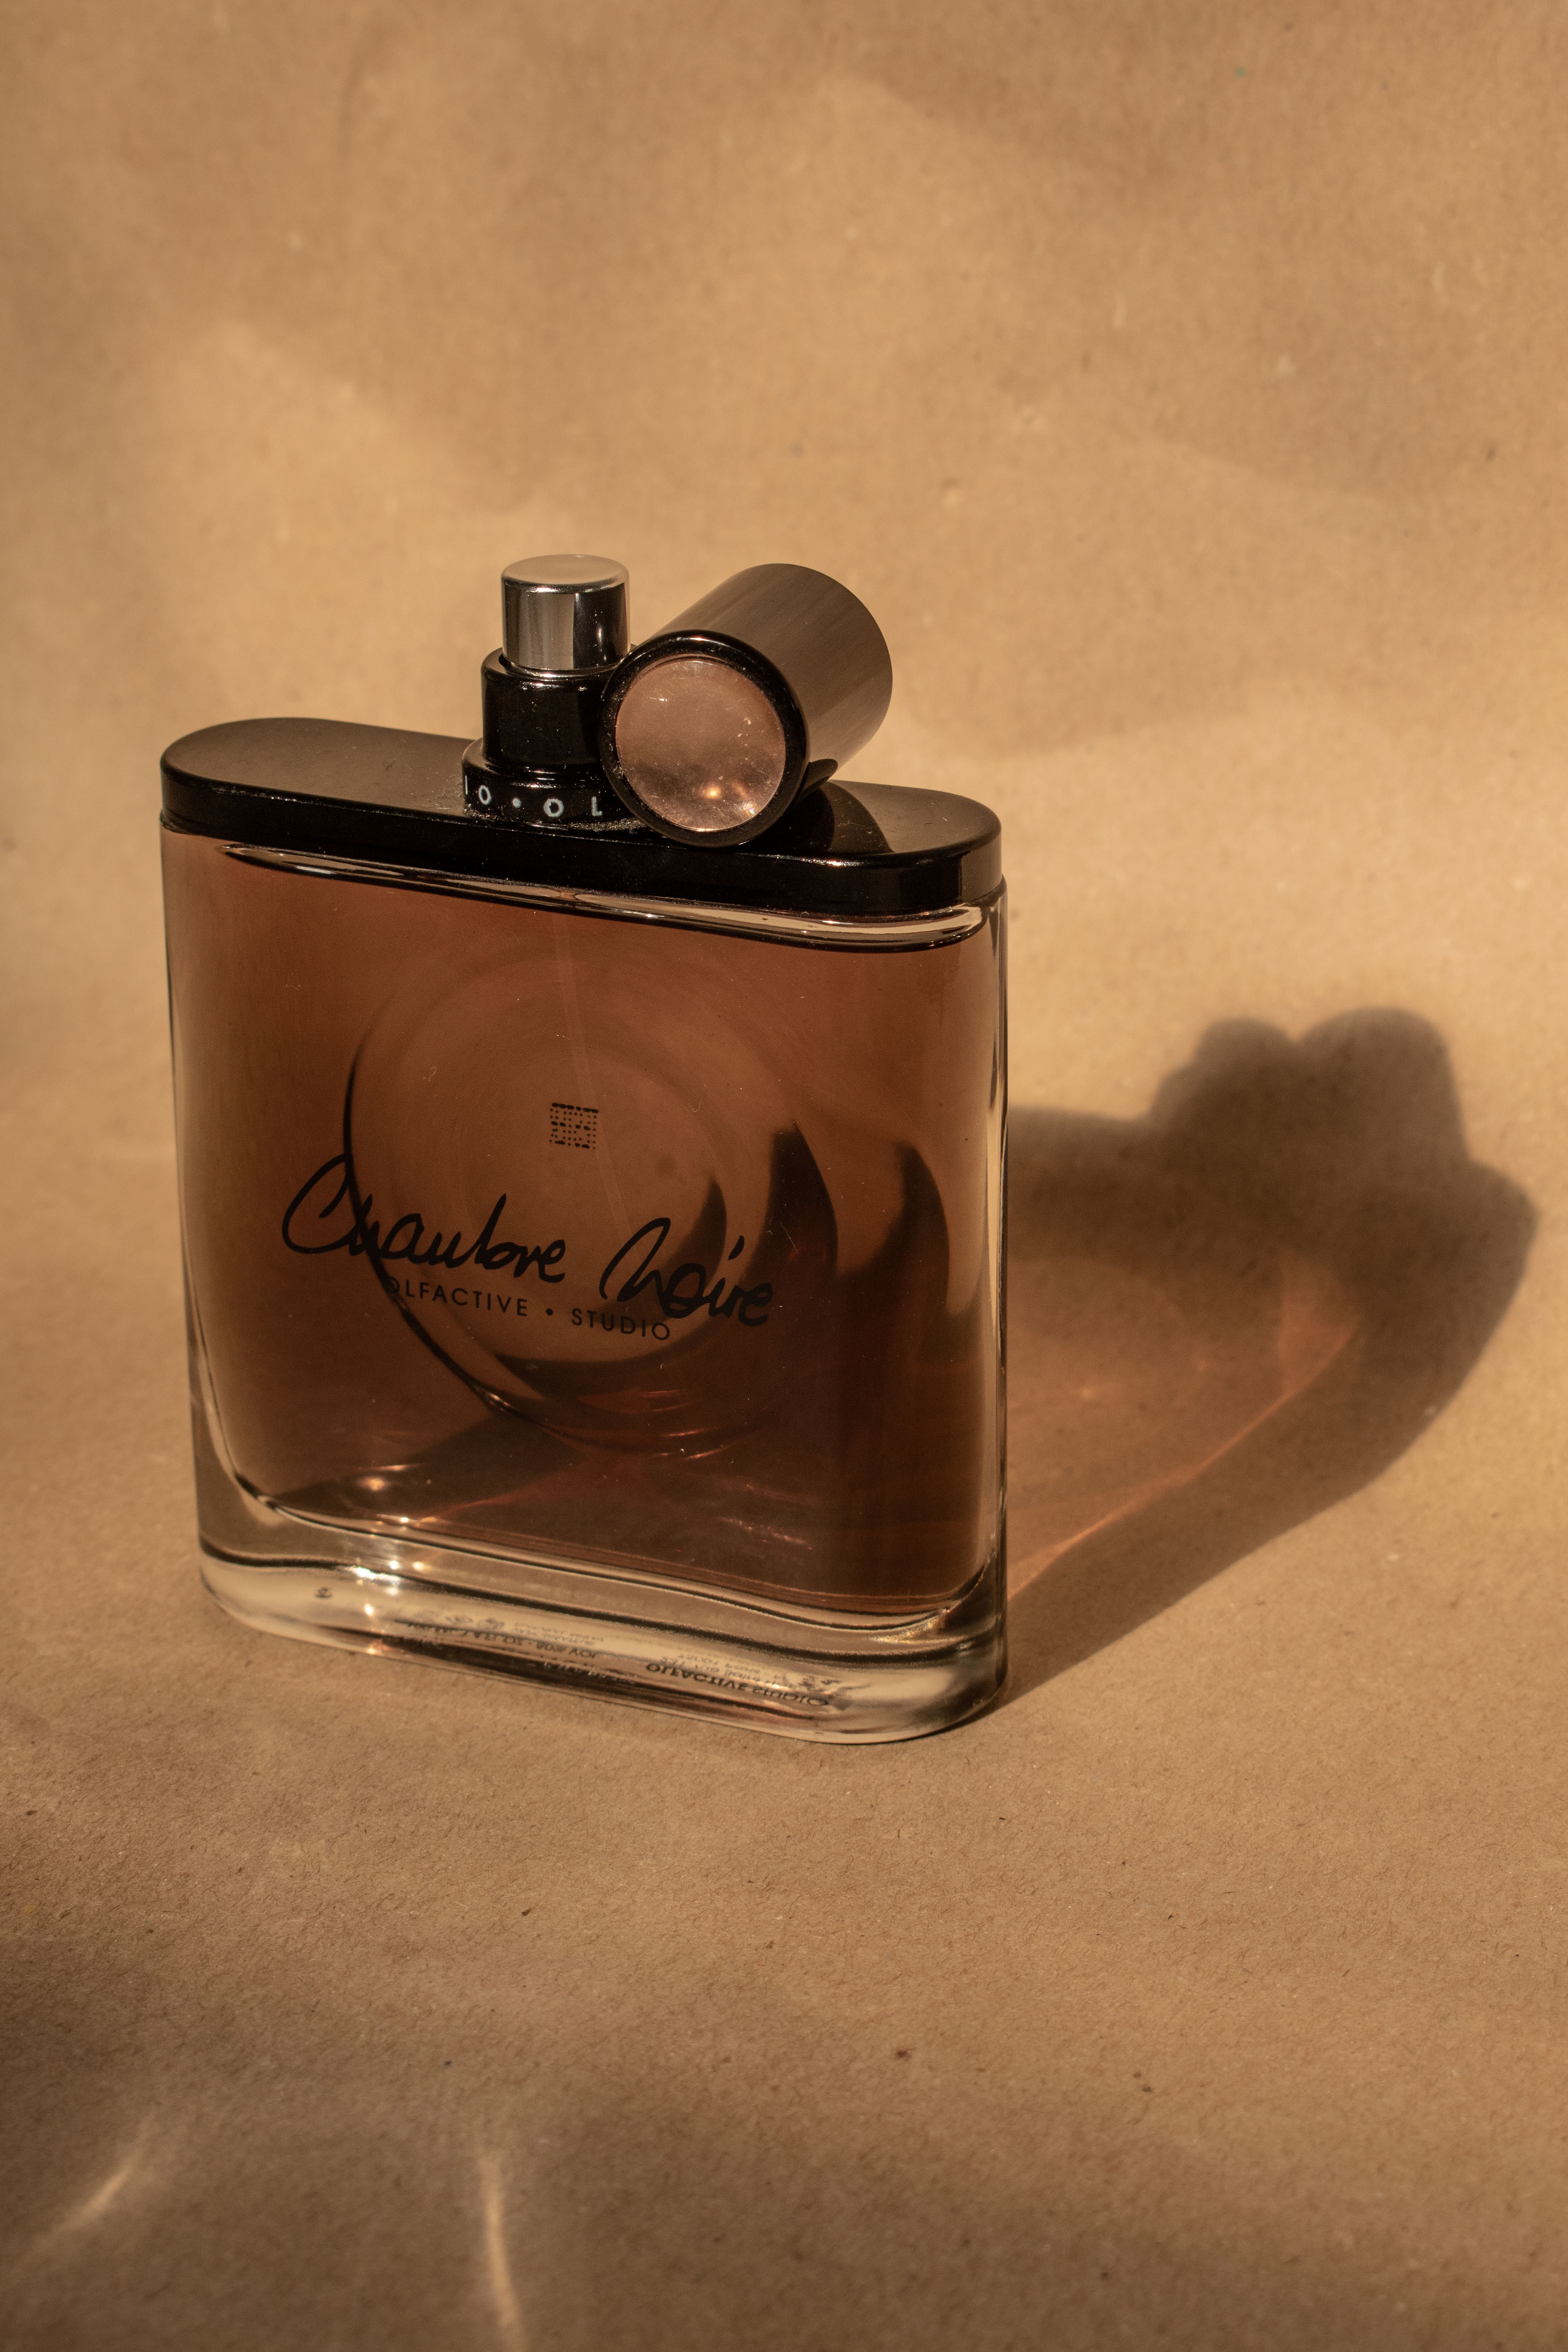 Olfactive Studio - Chambre Noire | Perfume Lounge